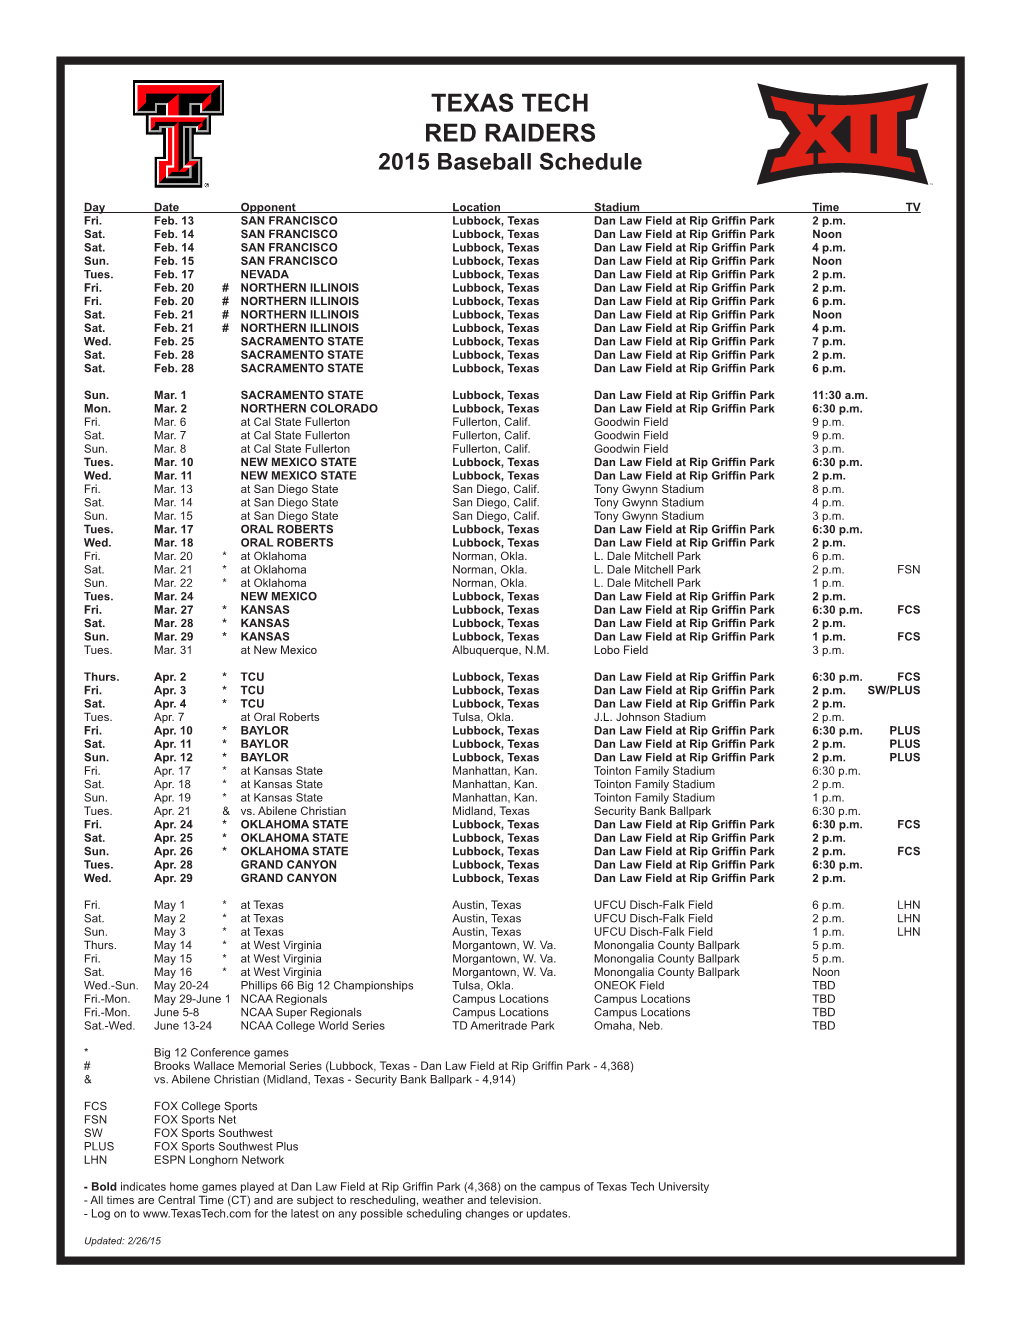 TEXAS TECH RED RAIDERS 2015 Baseball Schedule